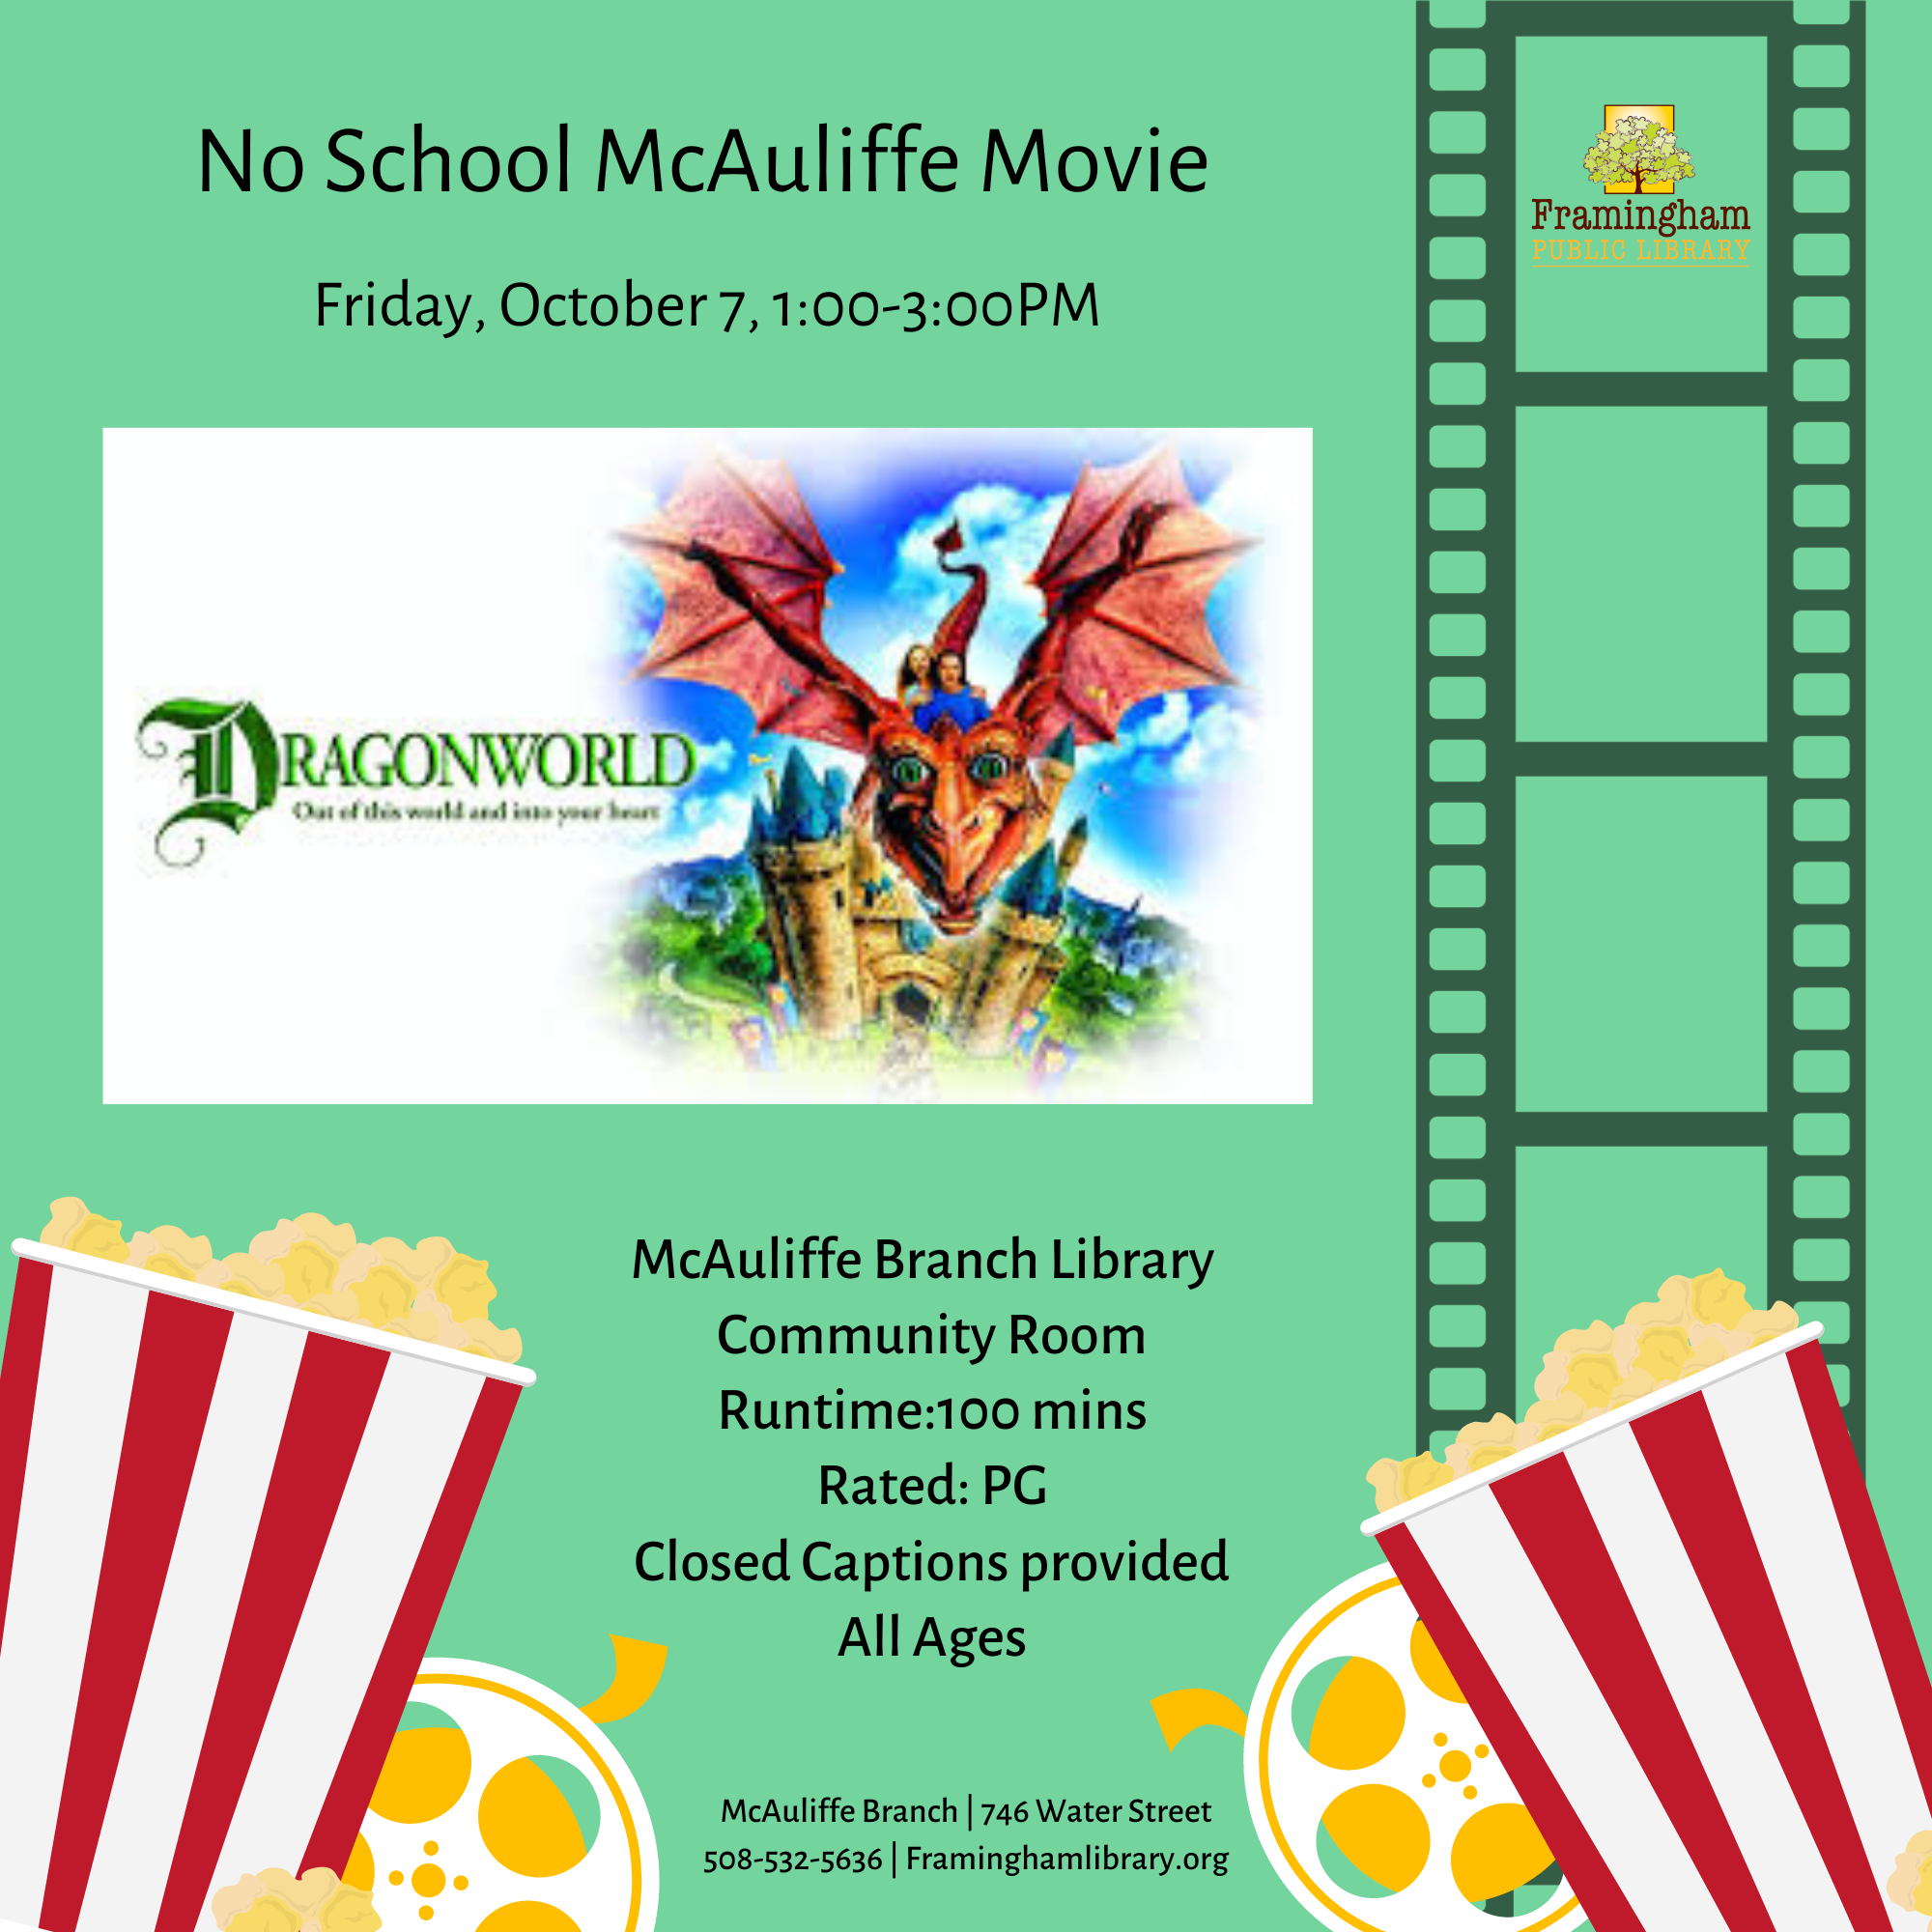 No School McAuliffe Movie - Dragonworld thumbnail Photo